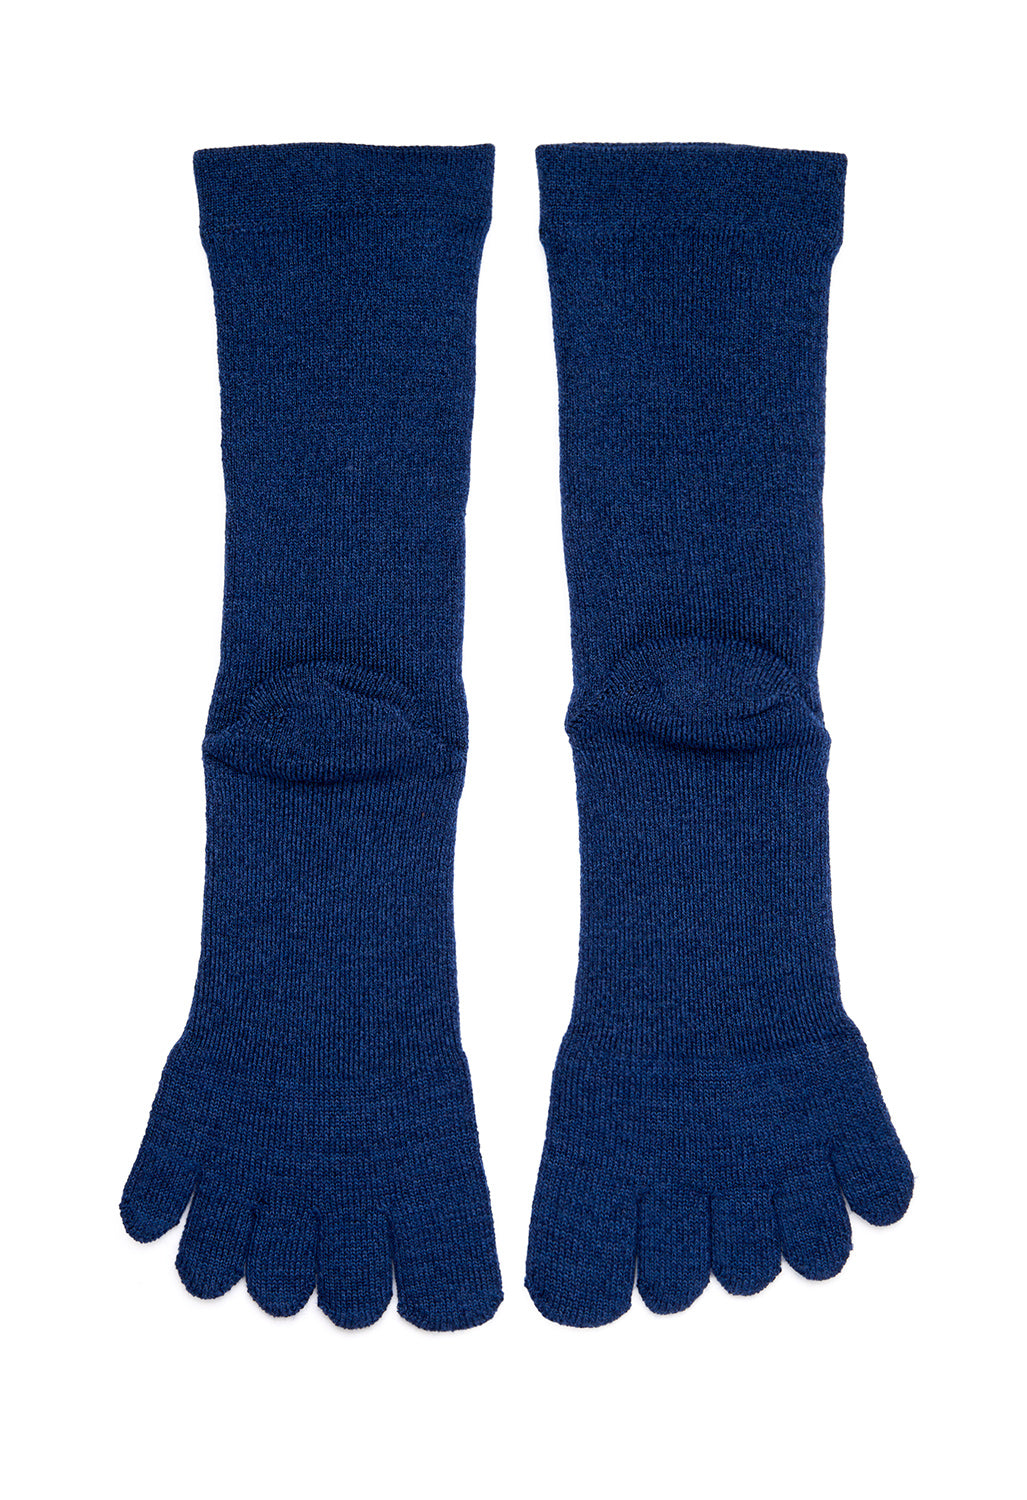 Montbell Merino Wool Trekking 5 Toe Socks - Indigo